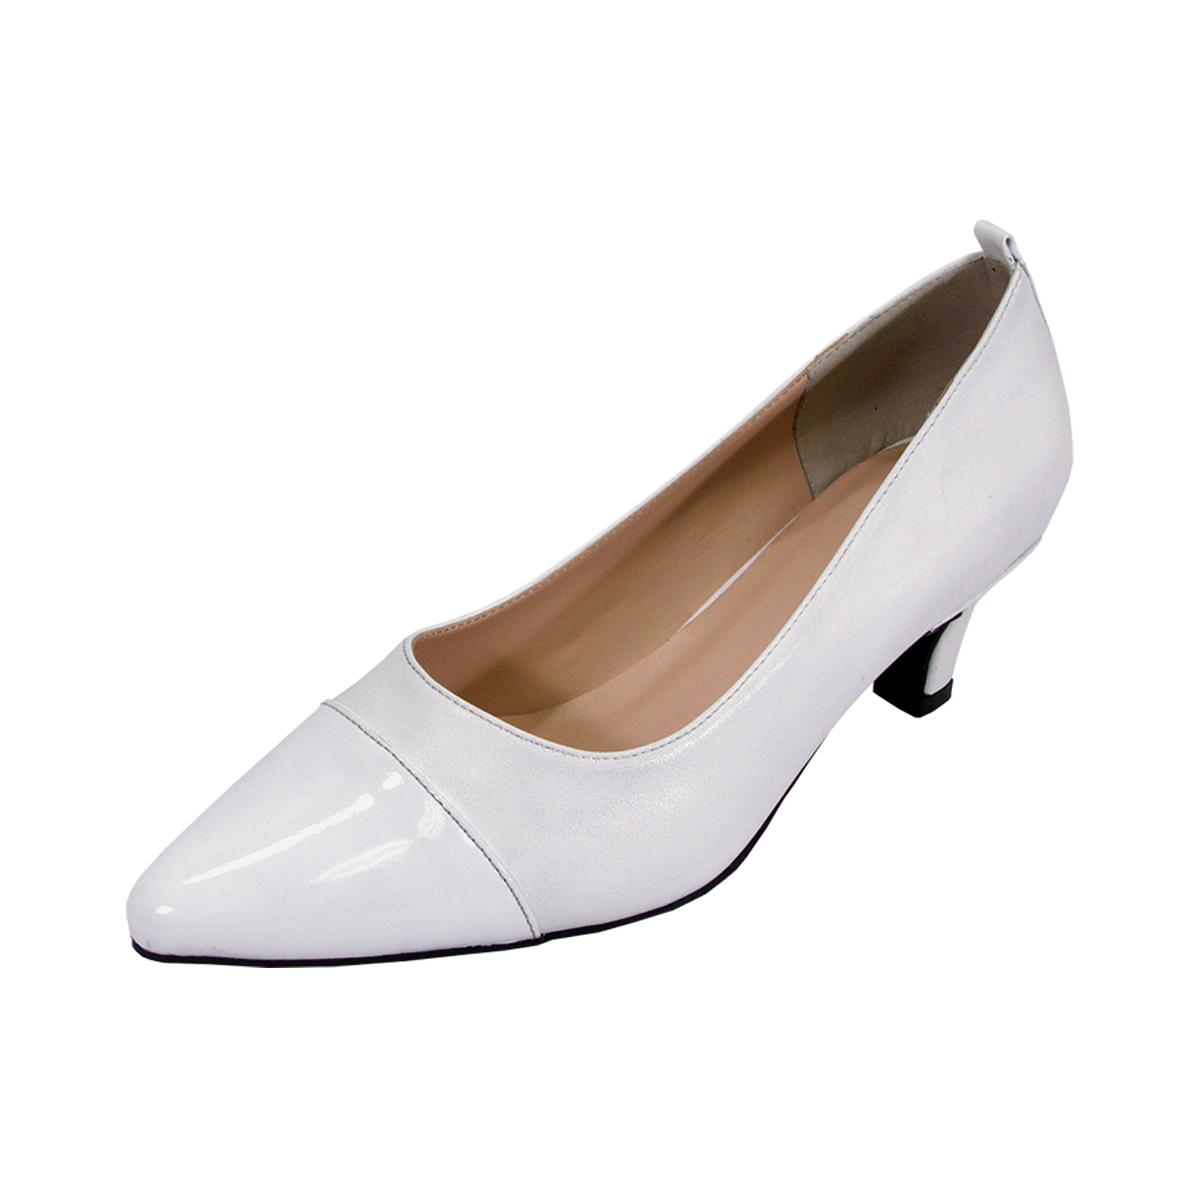 PEERAGE Arlene Women's Wide Width Casual Comfort Mid Heel Dress Shoes for Wedding, Prom, Evening, Work WHITE 8 - image 1 of 6